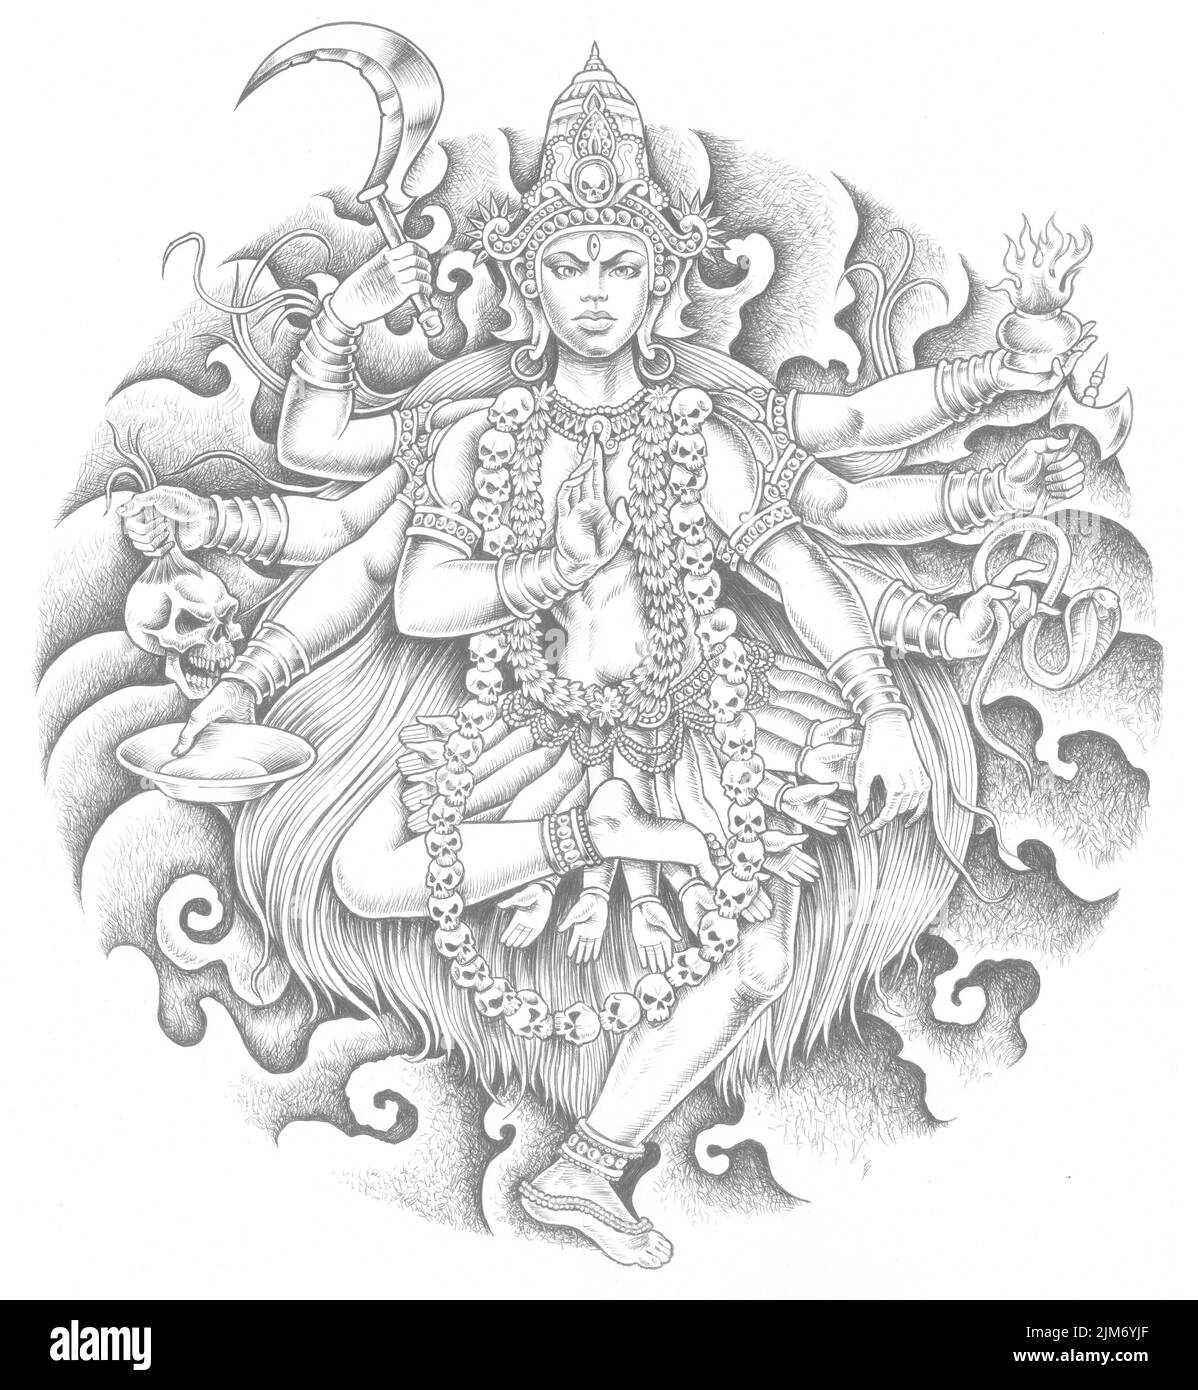 Shiva Tattoo Images - Free Download on Freepik